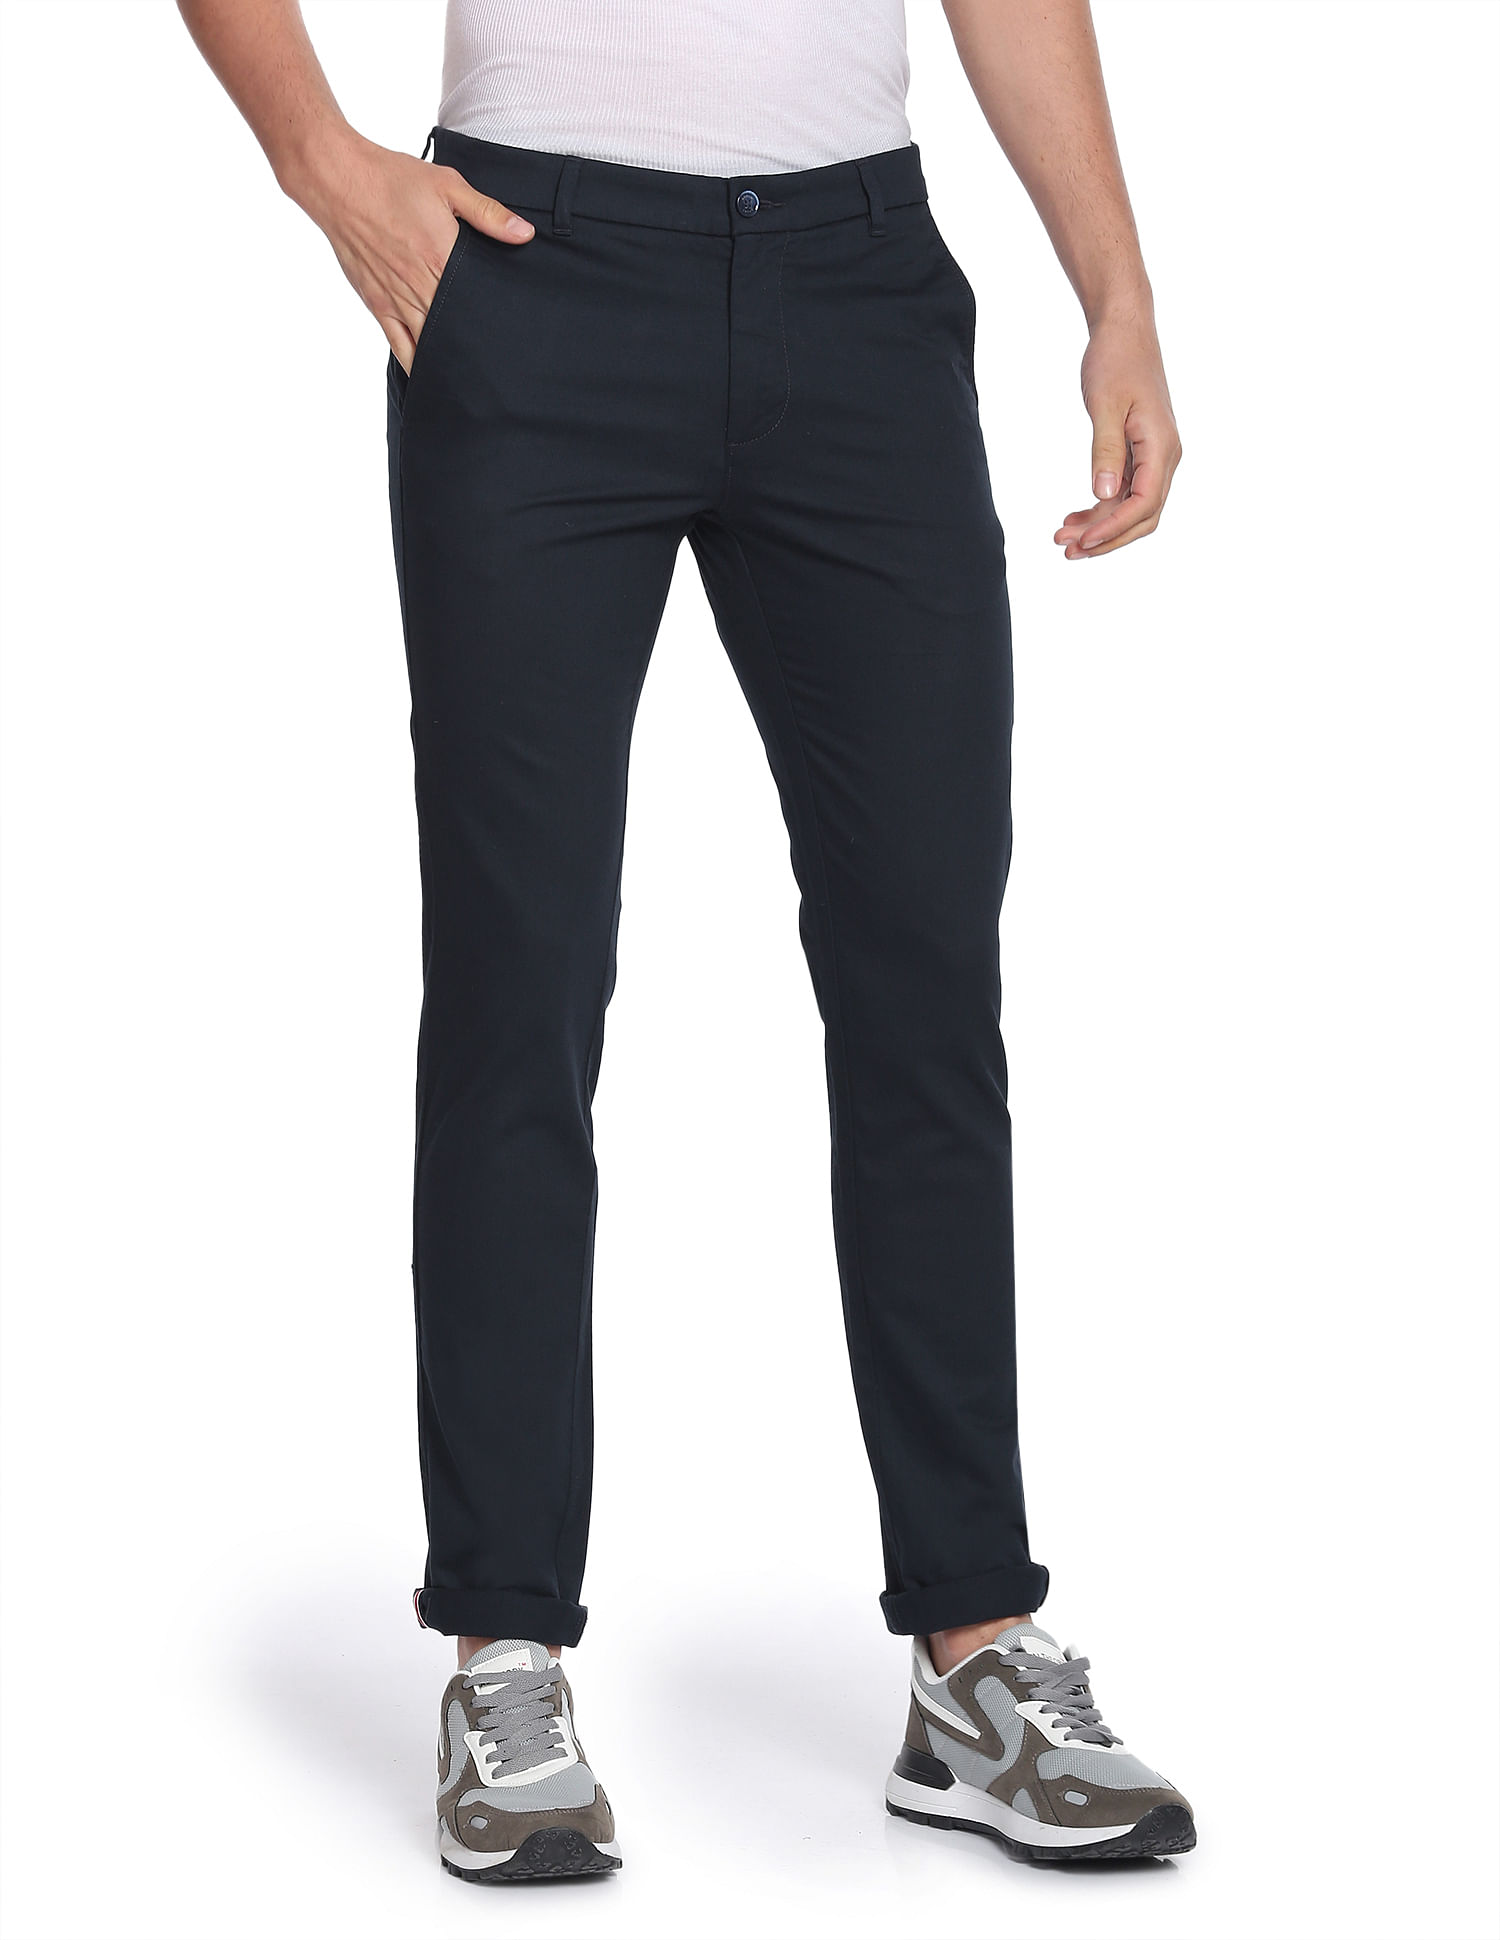 Hugo Boss Grey Slim Fit Casual Pants for Men Online India at Darveys.com